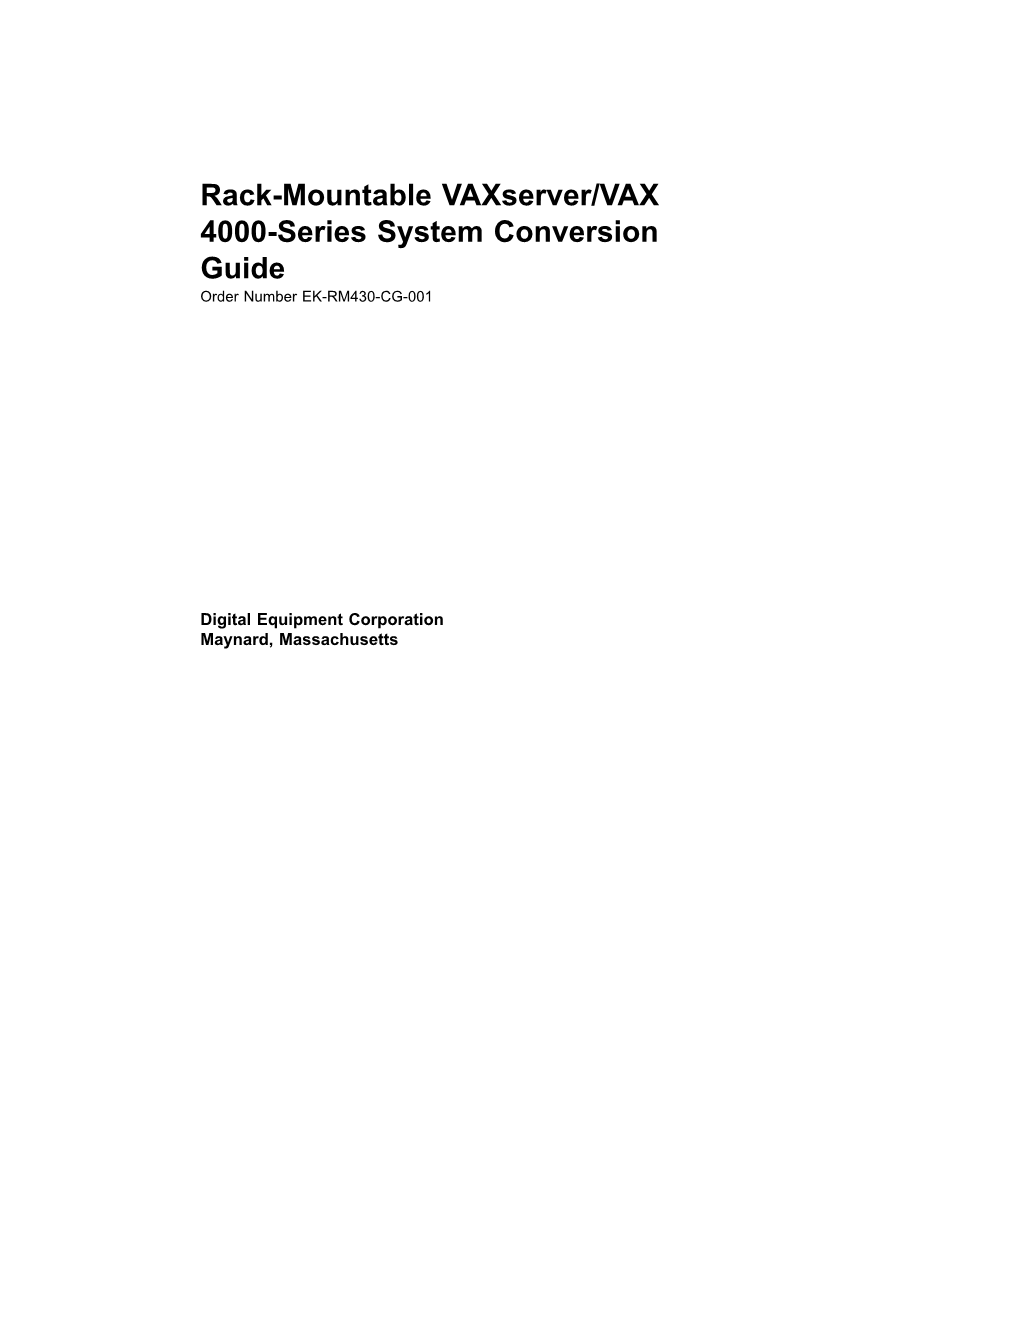 Rack-Mountable Vaxserver/VAX 4000-Series System Conversion Guide Order Number EK-RM430-CG-001